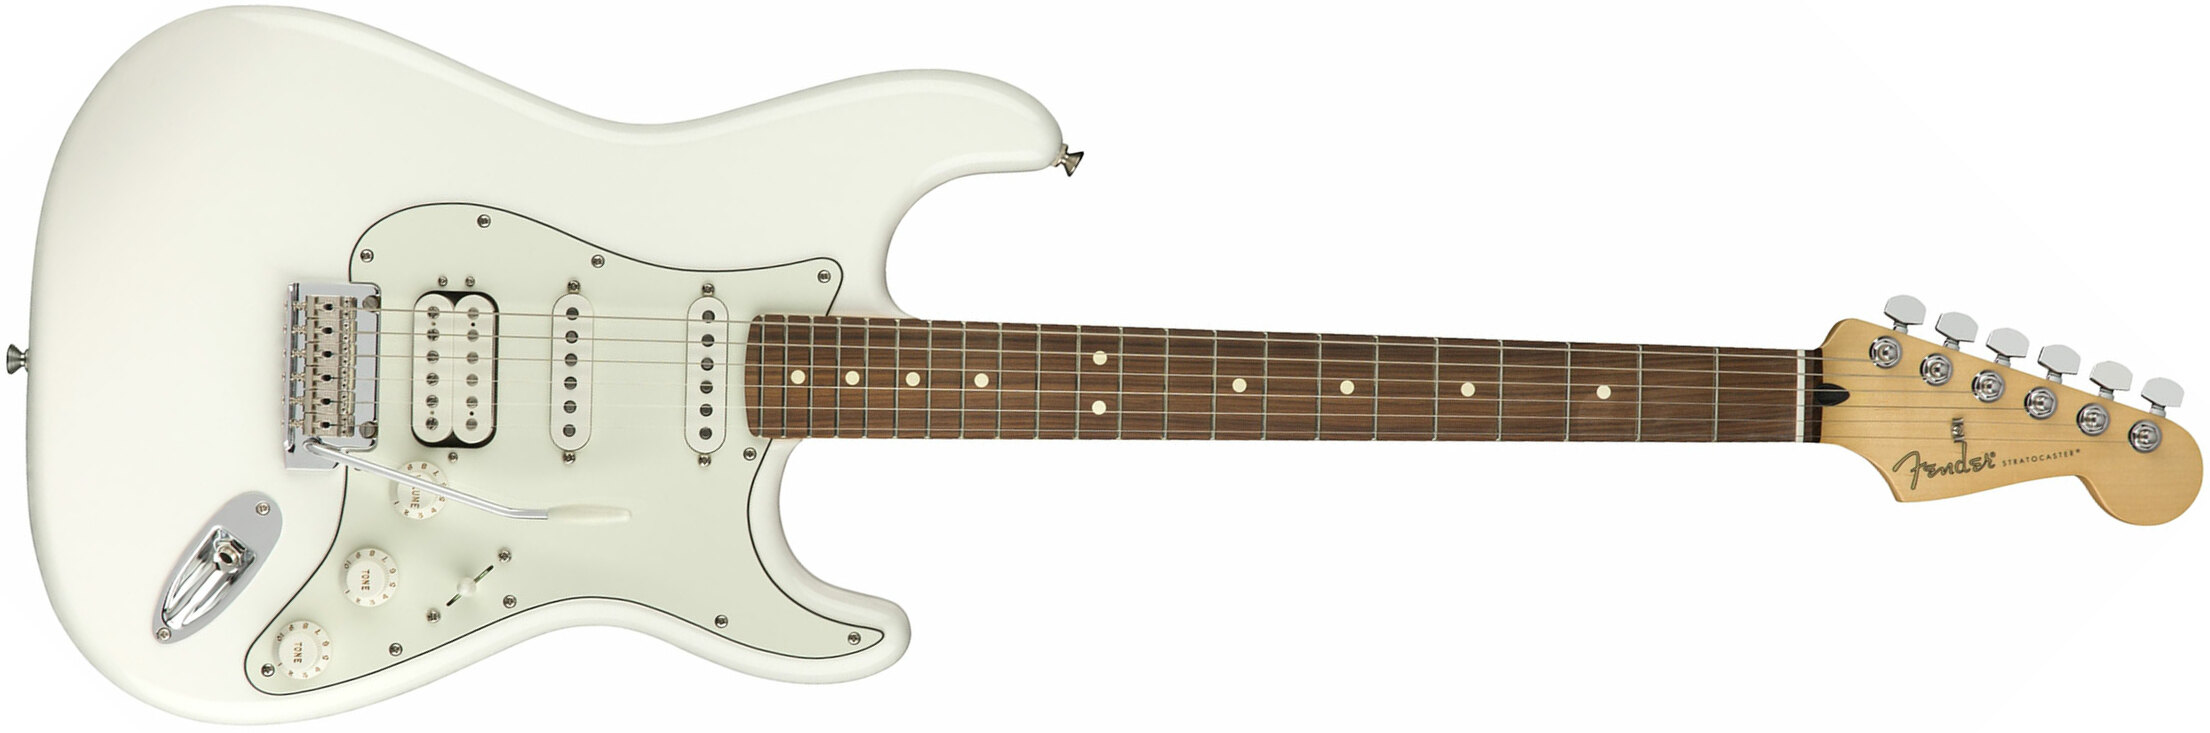 Fender Strat Player Mex Hss Pf - Polar White - Str shape electric guitar - Main picture